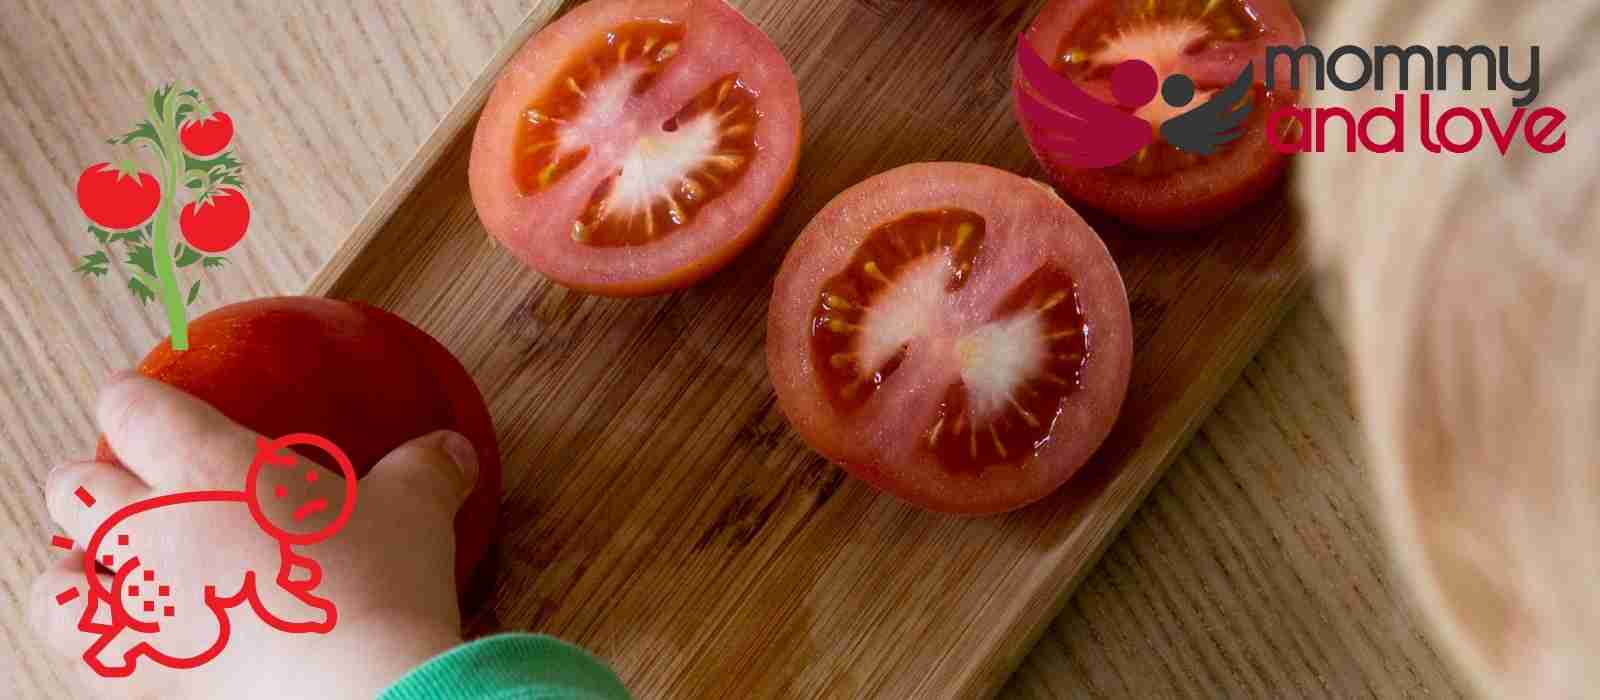 can Tomatoes Cause Diaper Rash